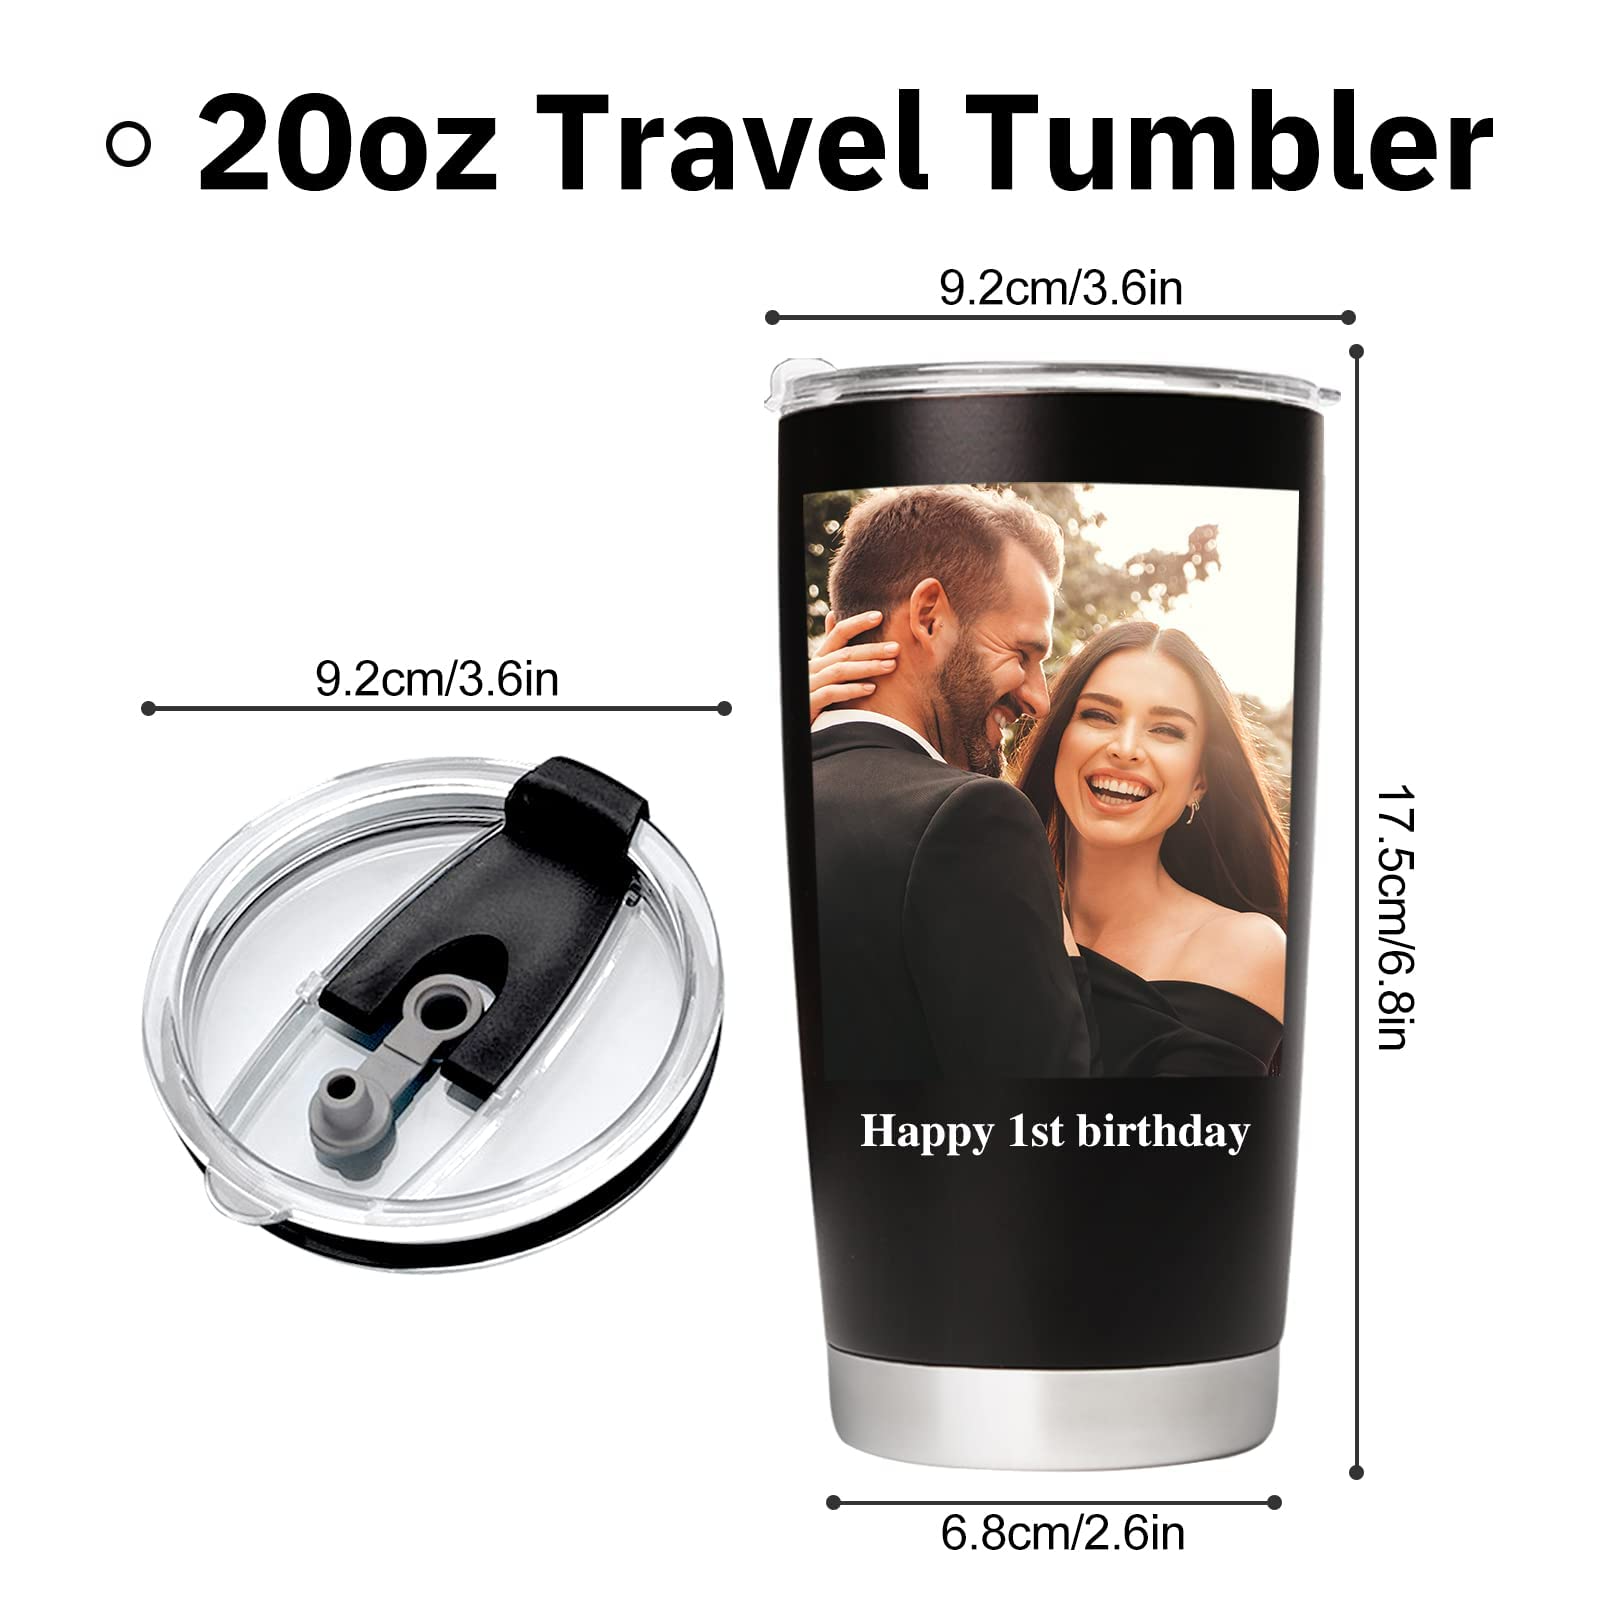 Personalized Stainless Steel Photo Coffee Tumbler Mug - 20oz Custom Gift for Christmas, Anniversary, Birthday